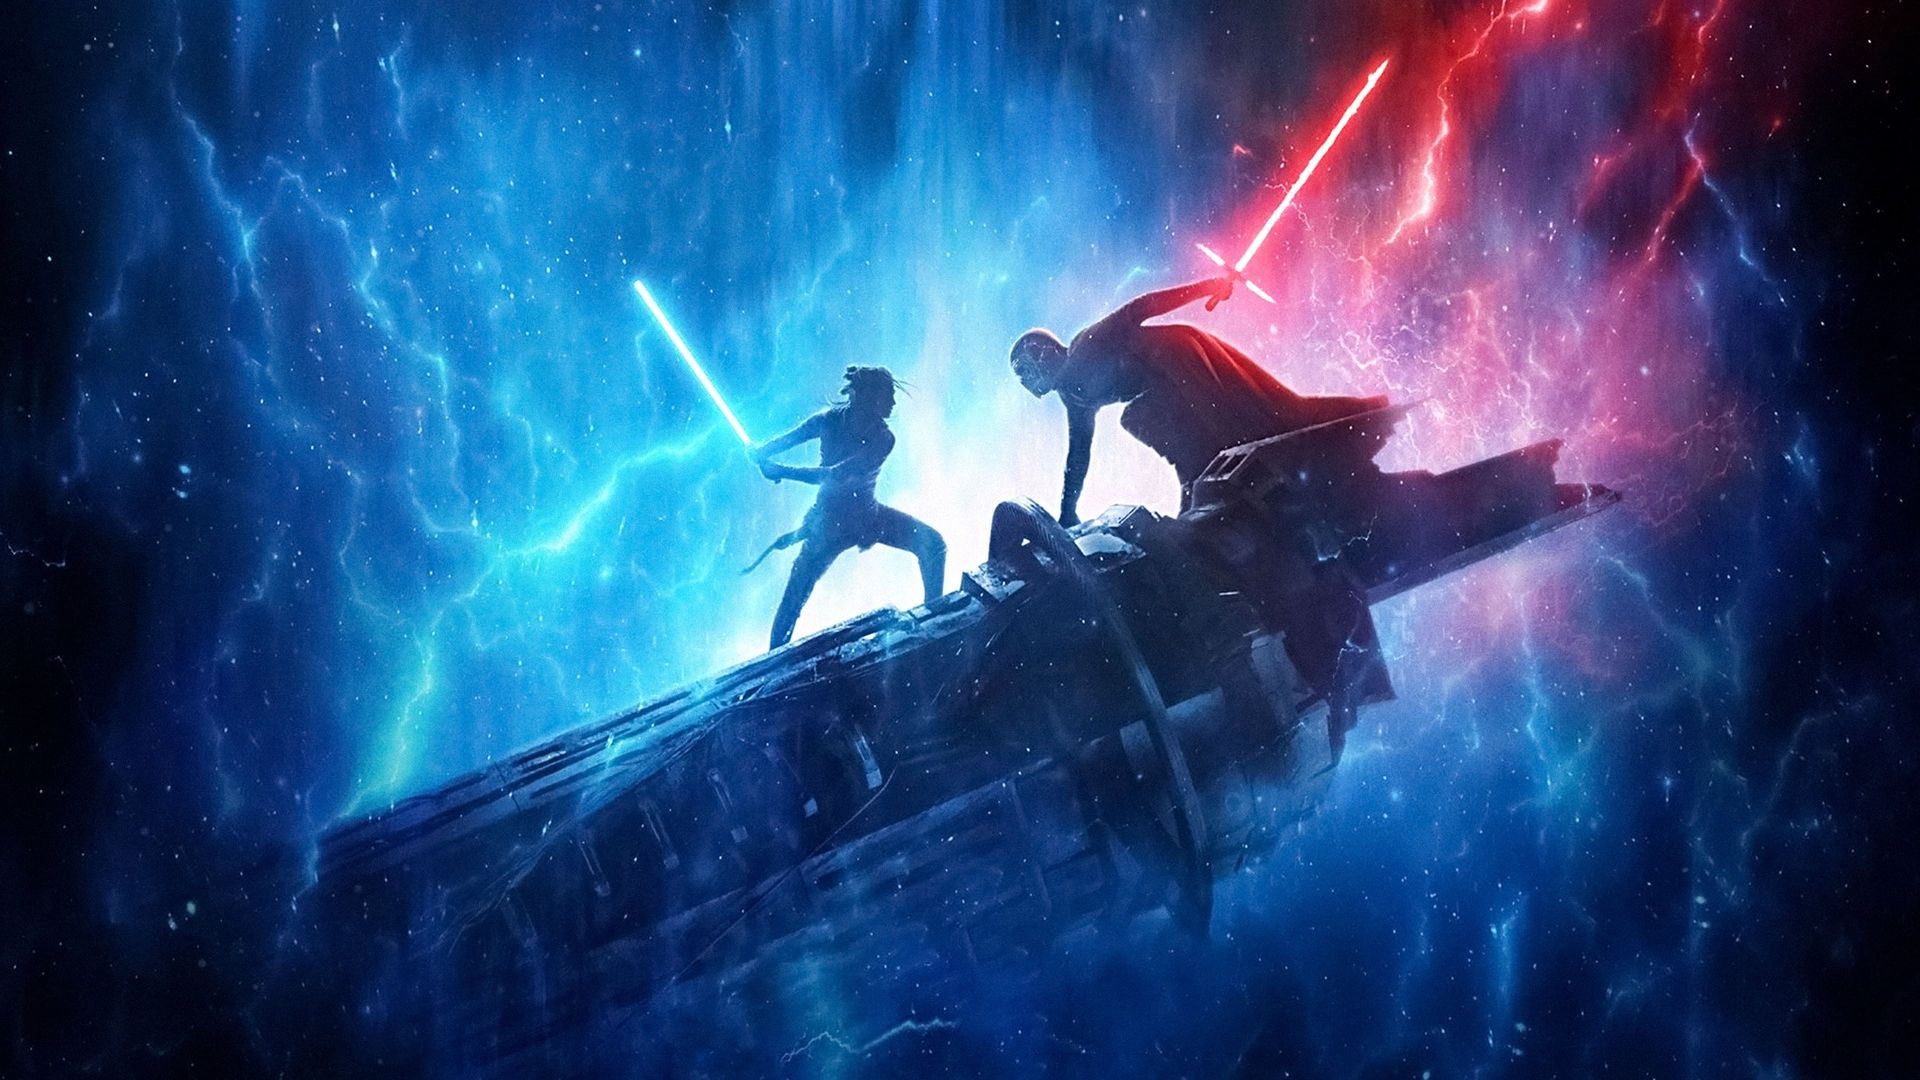 Star Wars: Episode IX - The Rise of Skywalker Backdrop